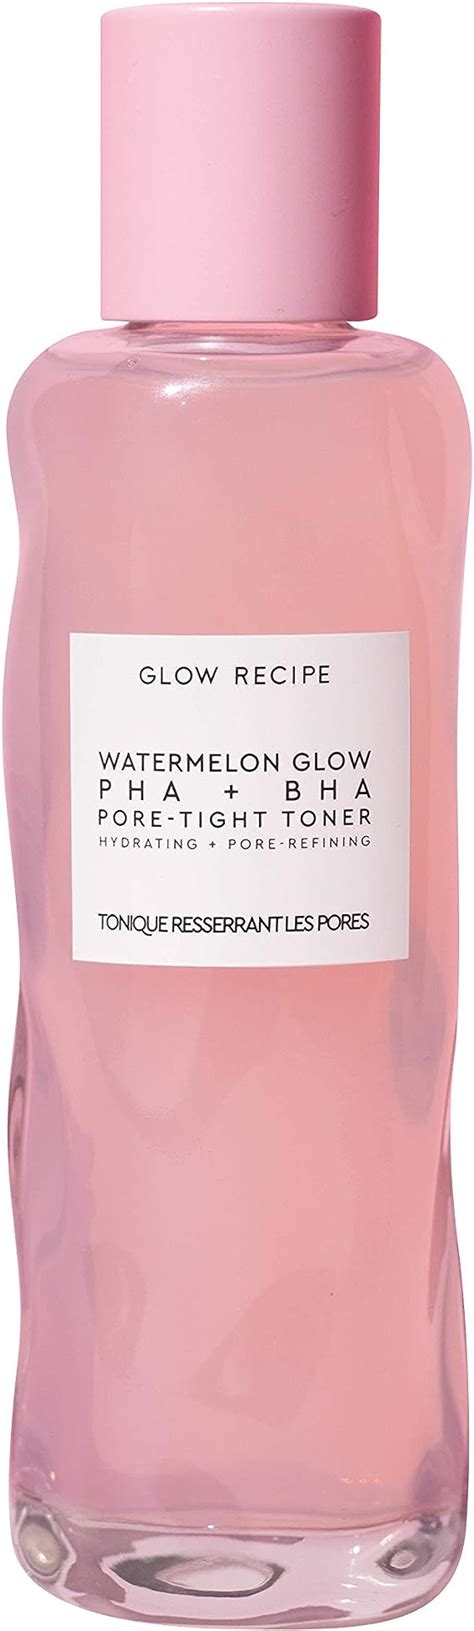 Glow Recipe Watermelon Glow Pha Bha Pore Tight Toner 150ml Amazon